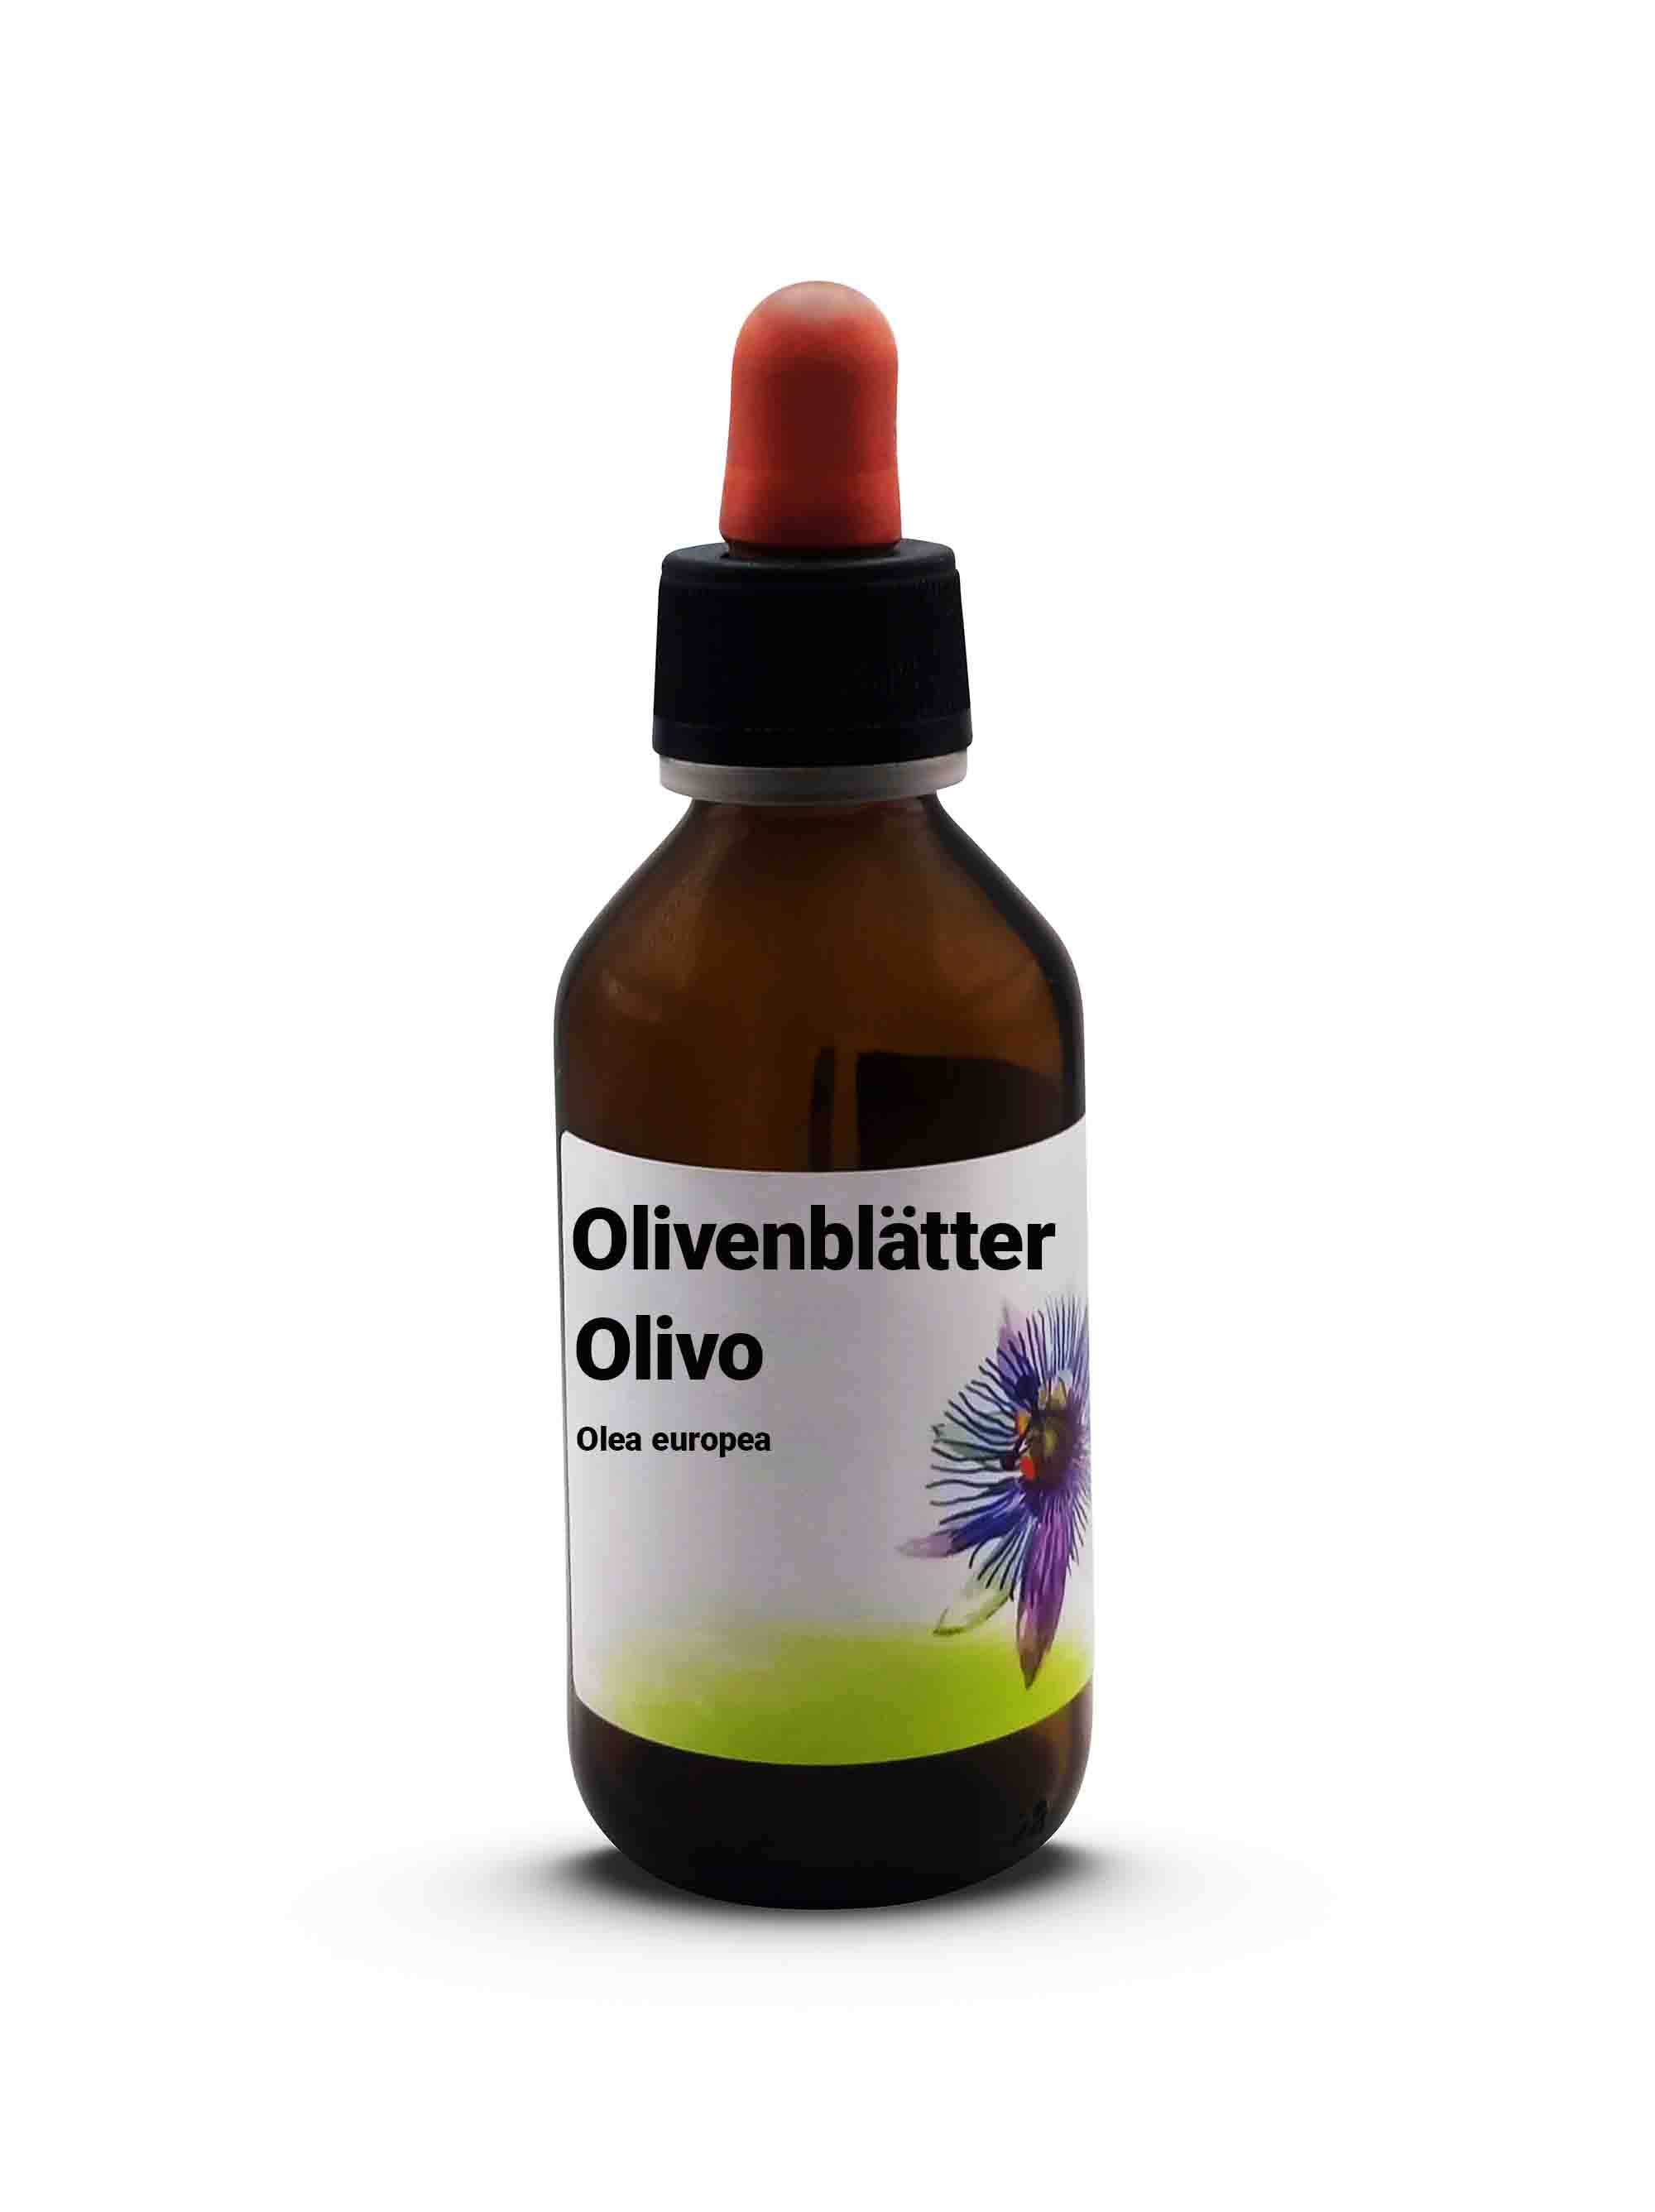 Olivenblätter Olivo - Olea europea 100 ml